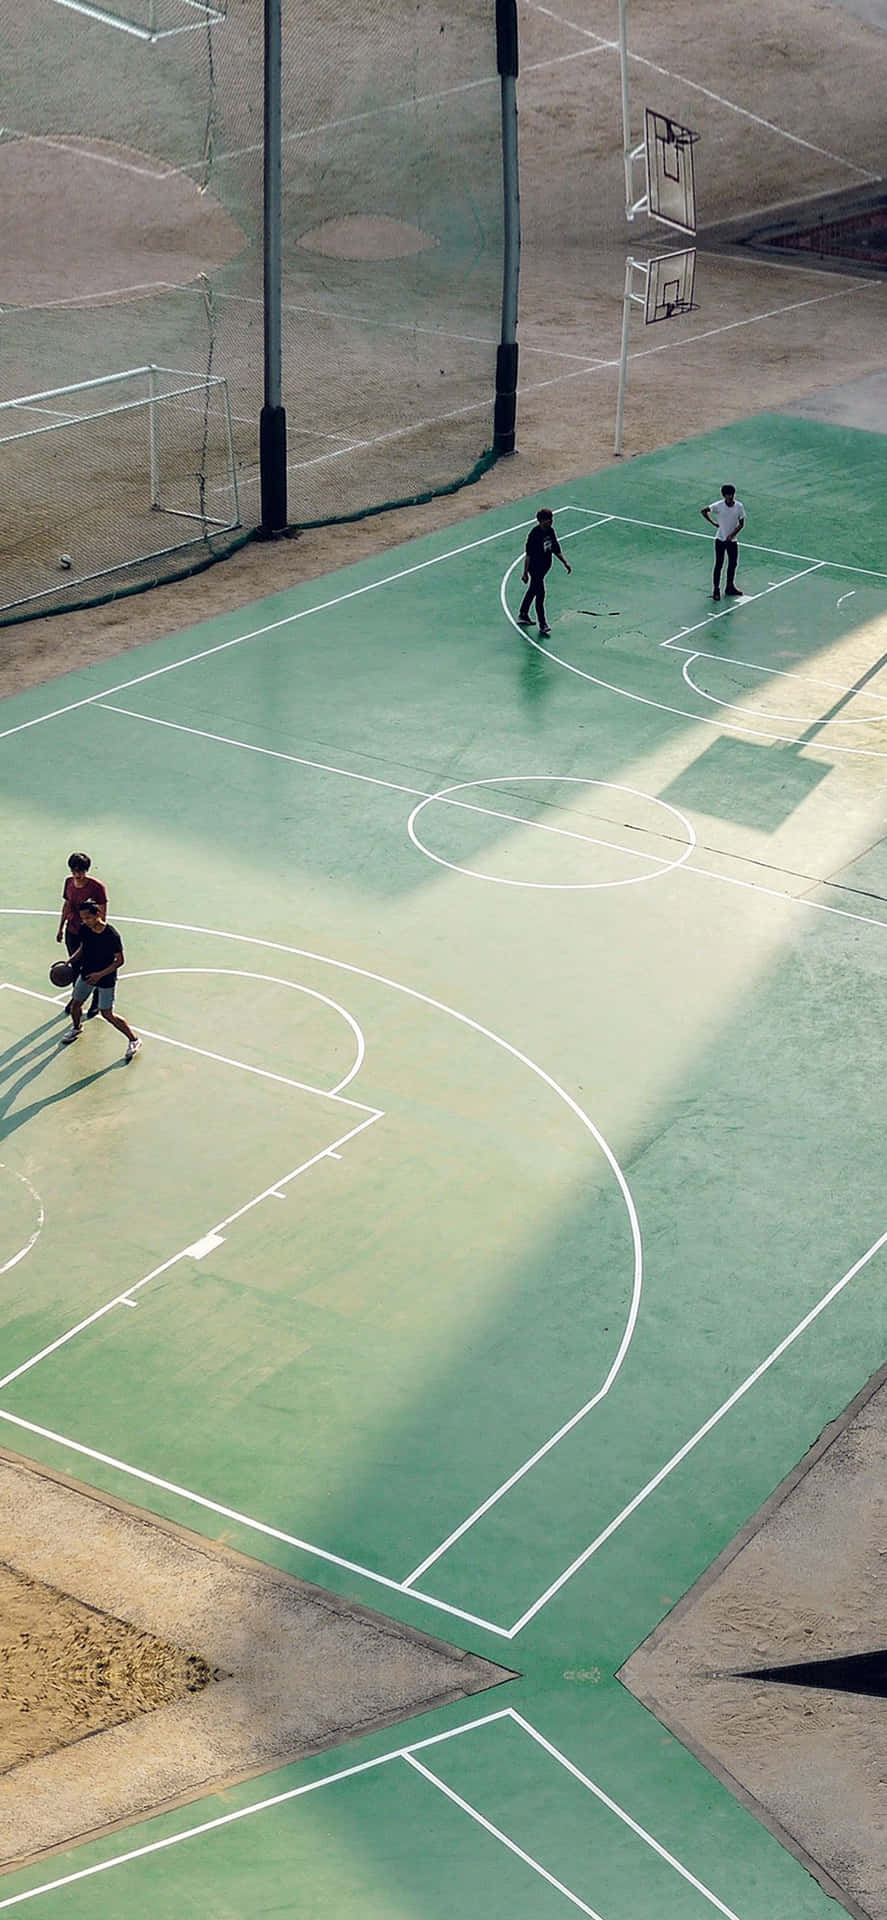 Iphonexs Basketball Platz Grüner Hintergrund